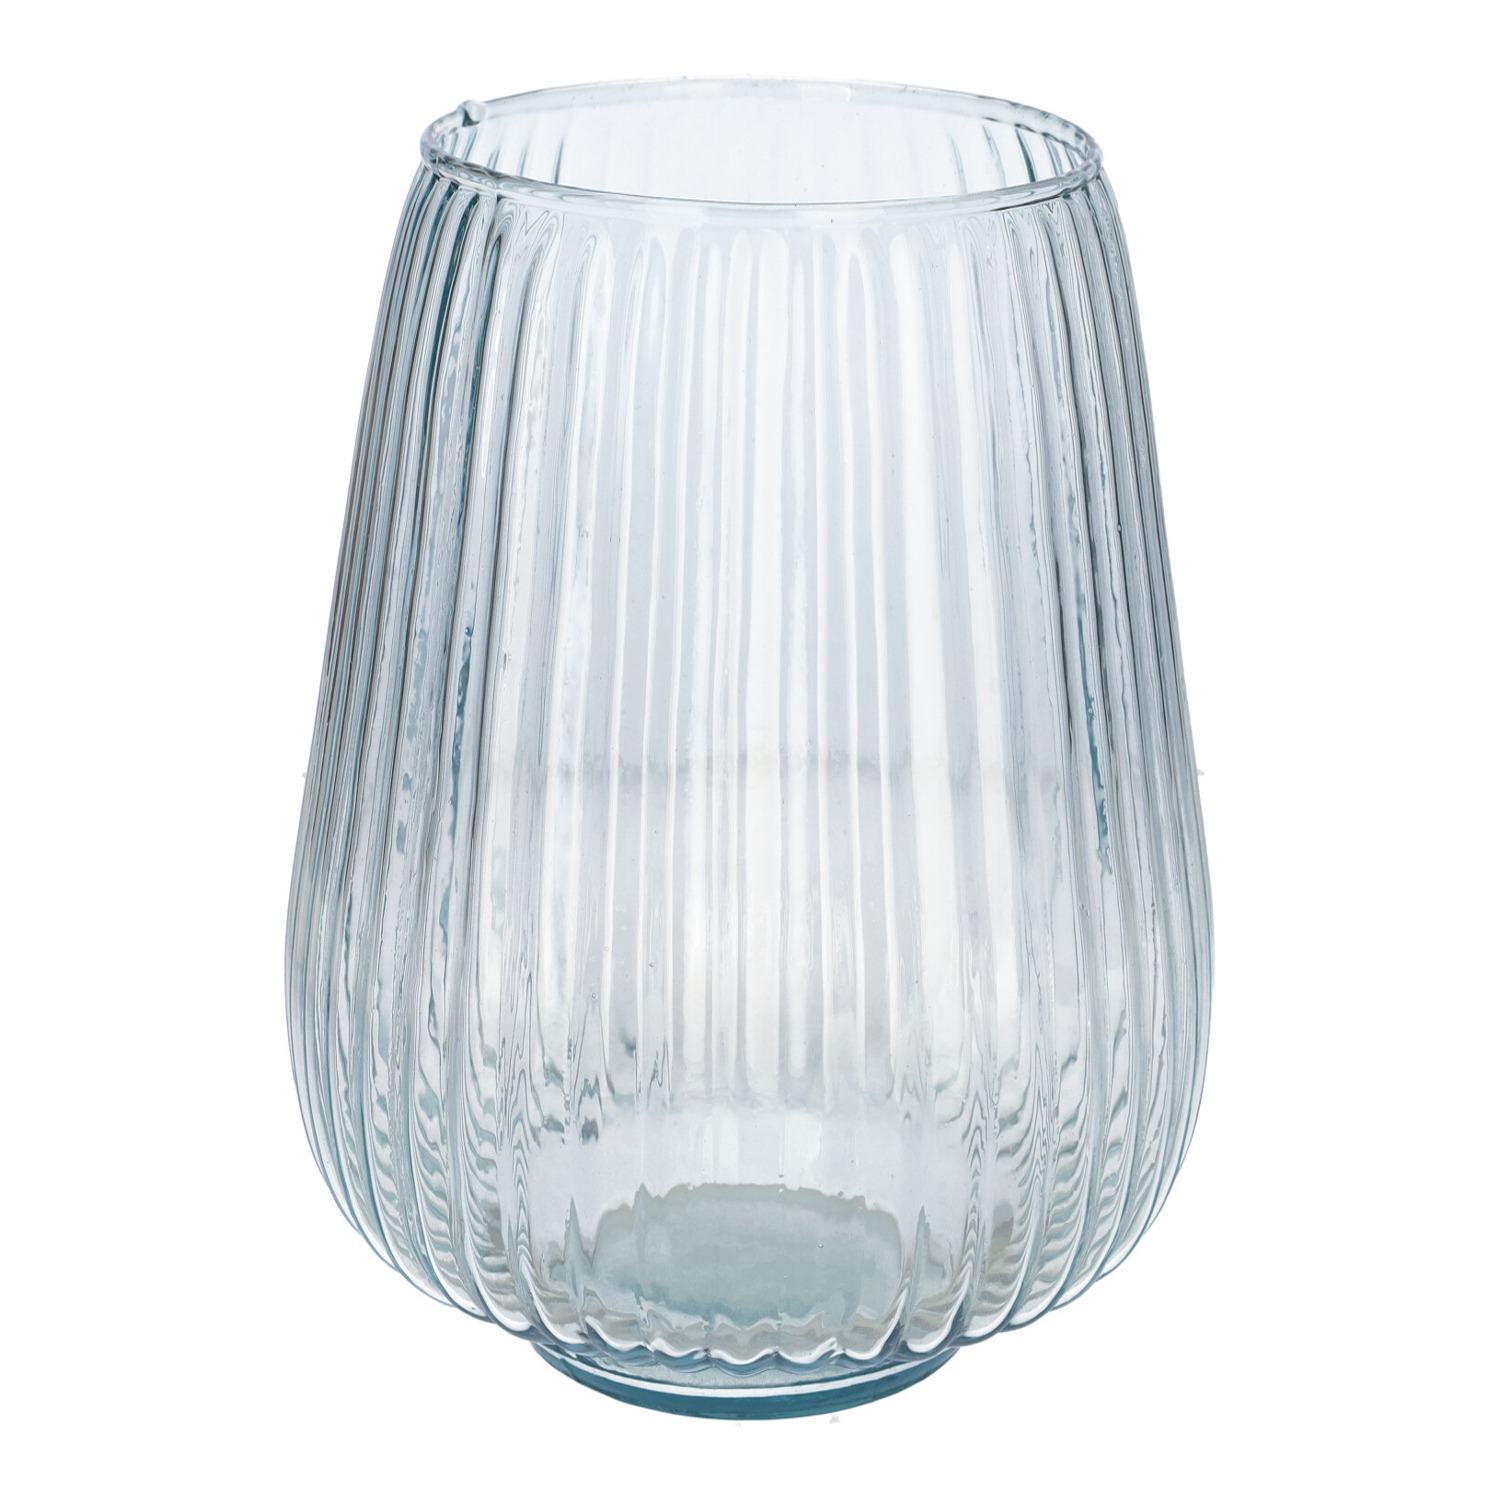 Merkloos Bloemenvaas Amar - helder transparant glas - D25 x H29 cm - decoratieve vaas - bloemen/takken -